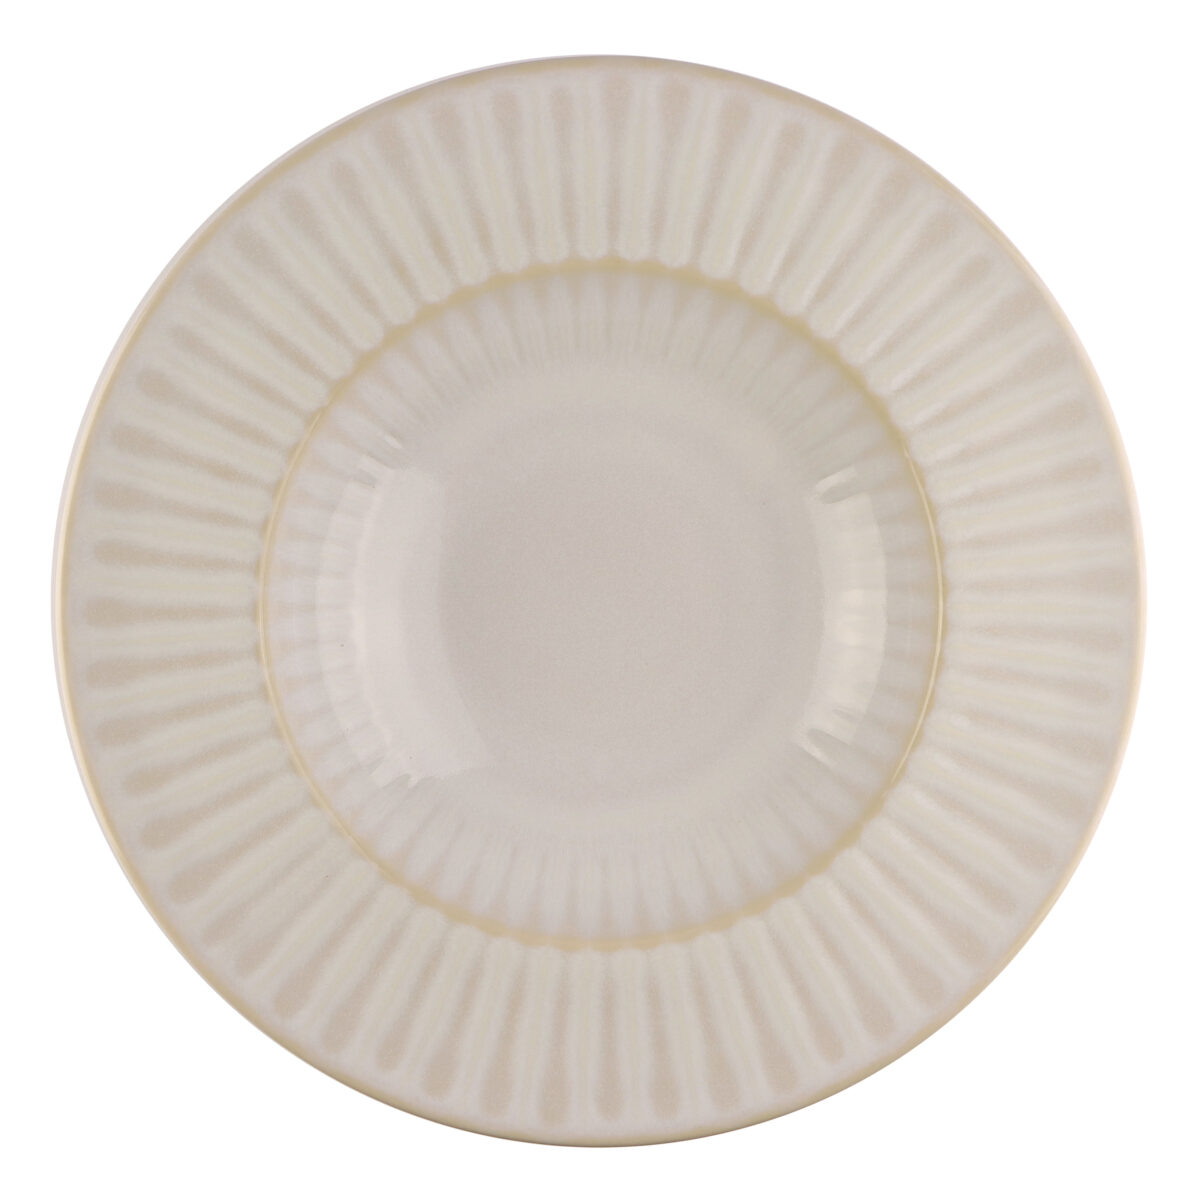 Coupe Pasta Plate Prints white